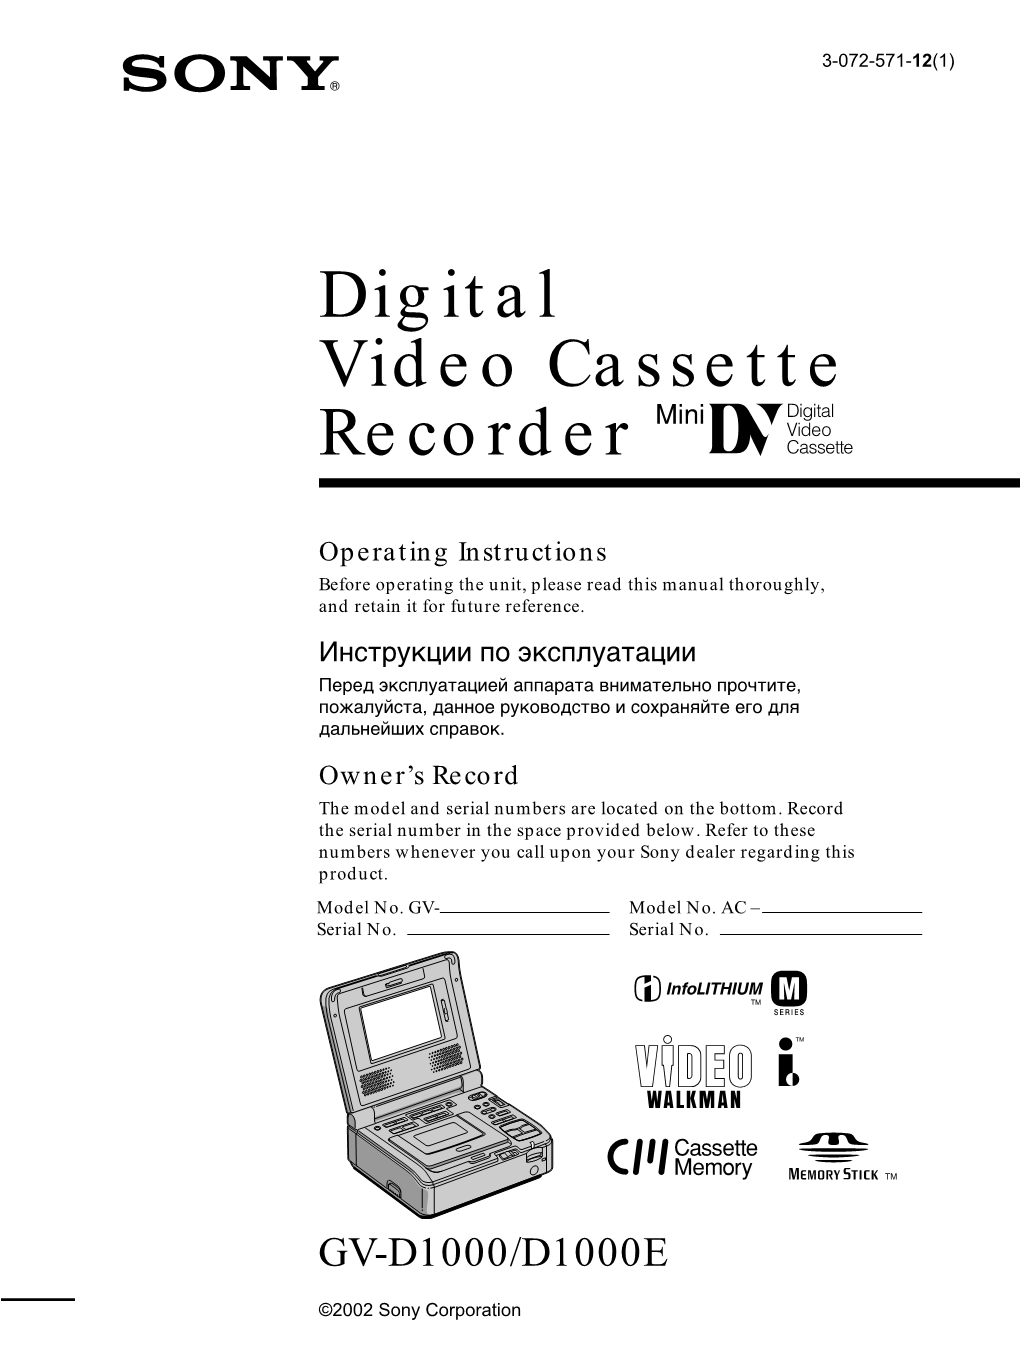 Digital Video Cassette Recorder